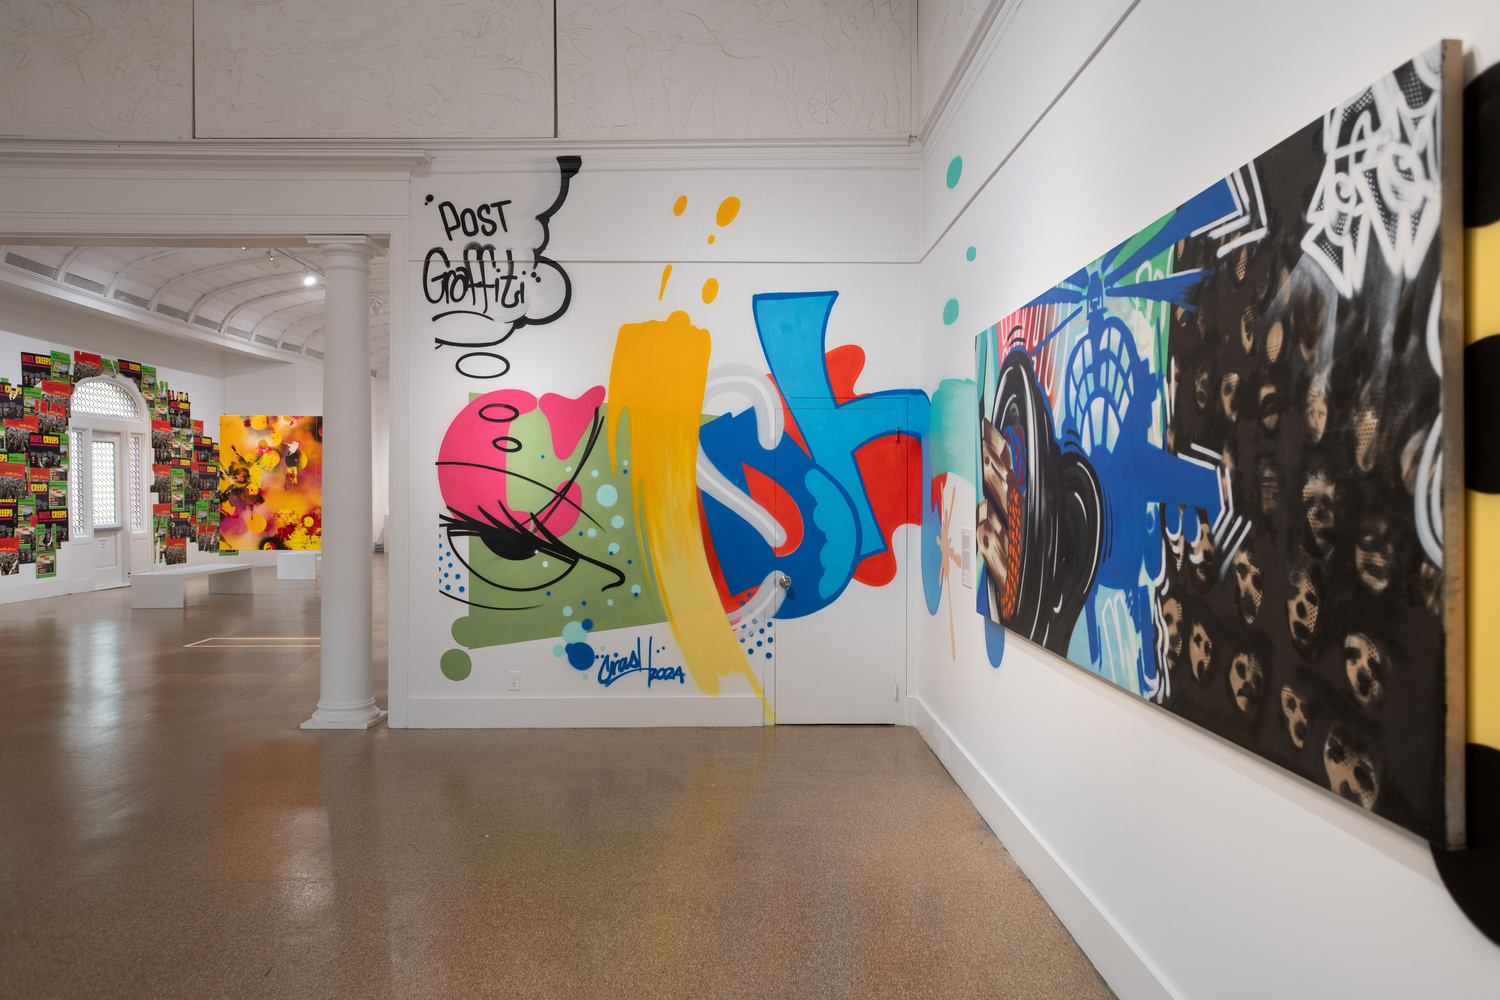 Installation view of “Beyond The Streets: Post Graffiti” at Southampton Arts Center. GARY MAMAY